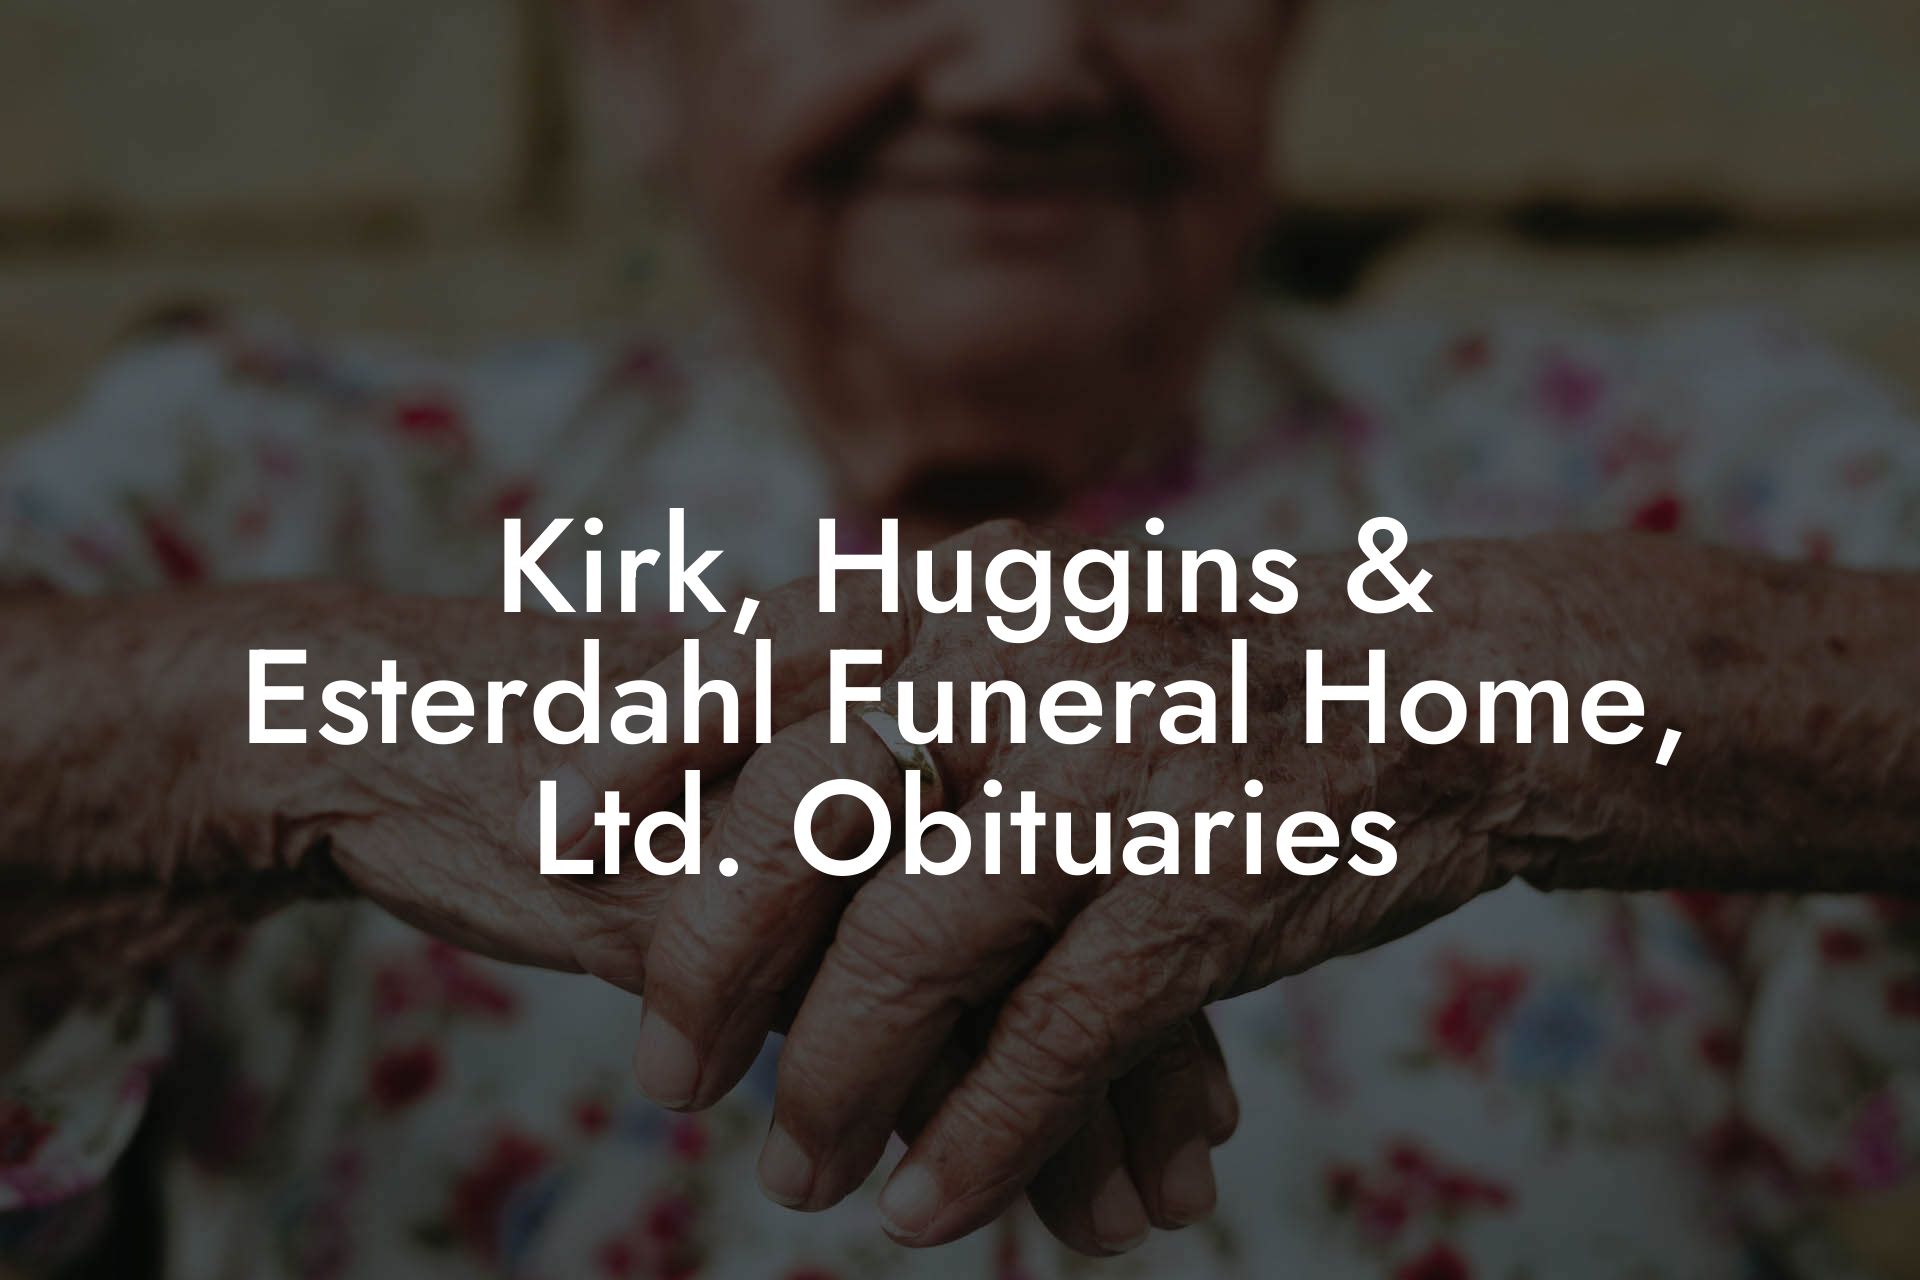 Kirk, Huggins & Esterdahl Funeral Home, Ltd. Obituaries